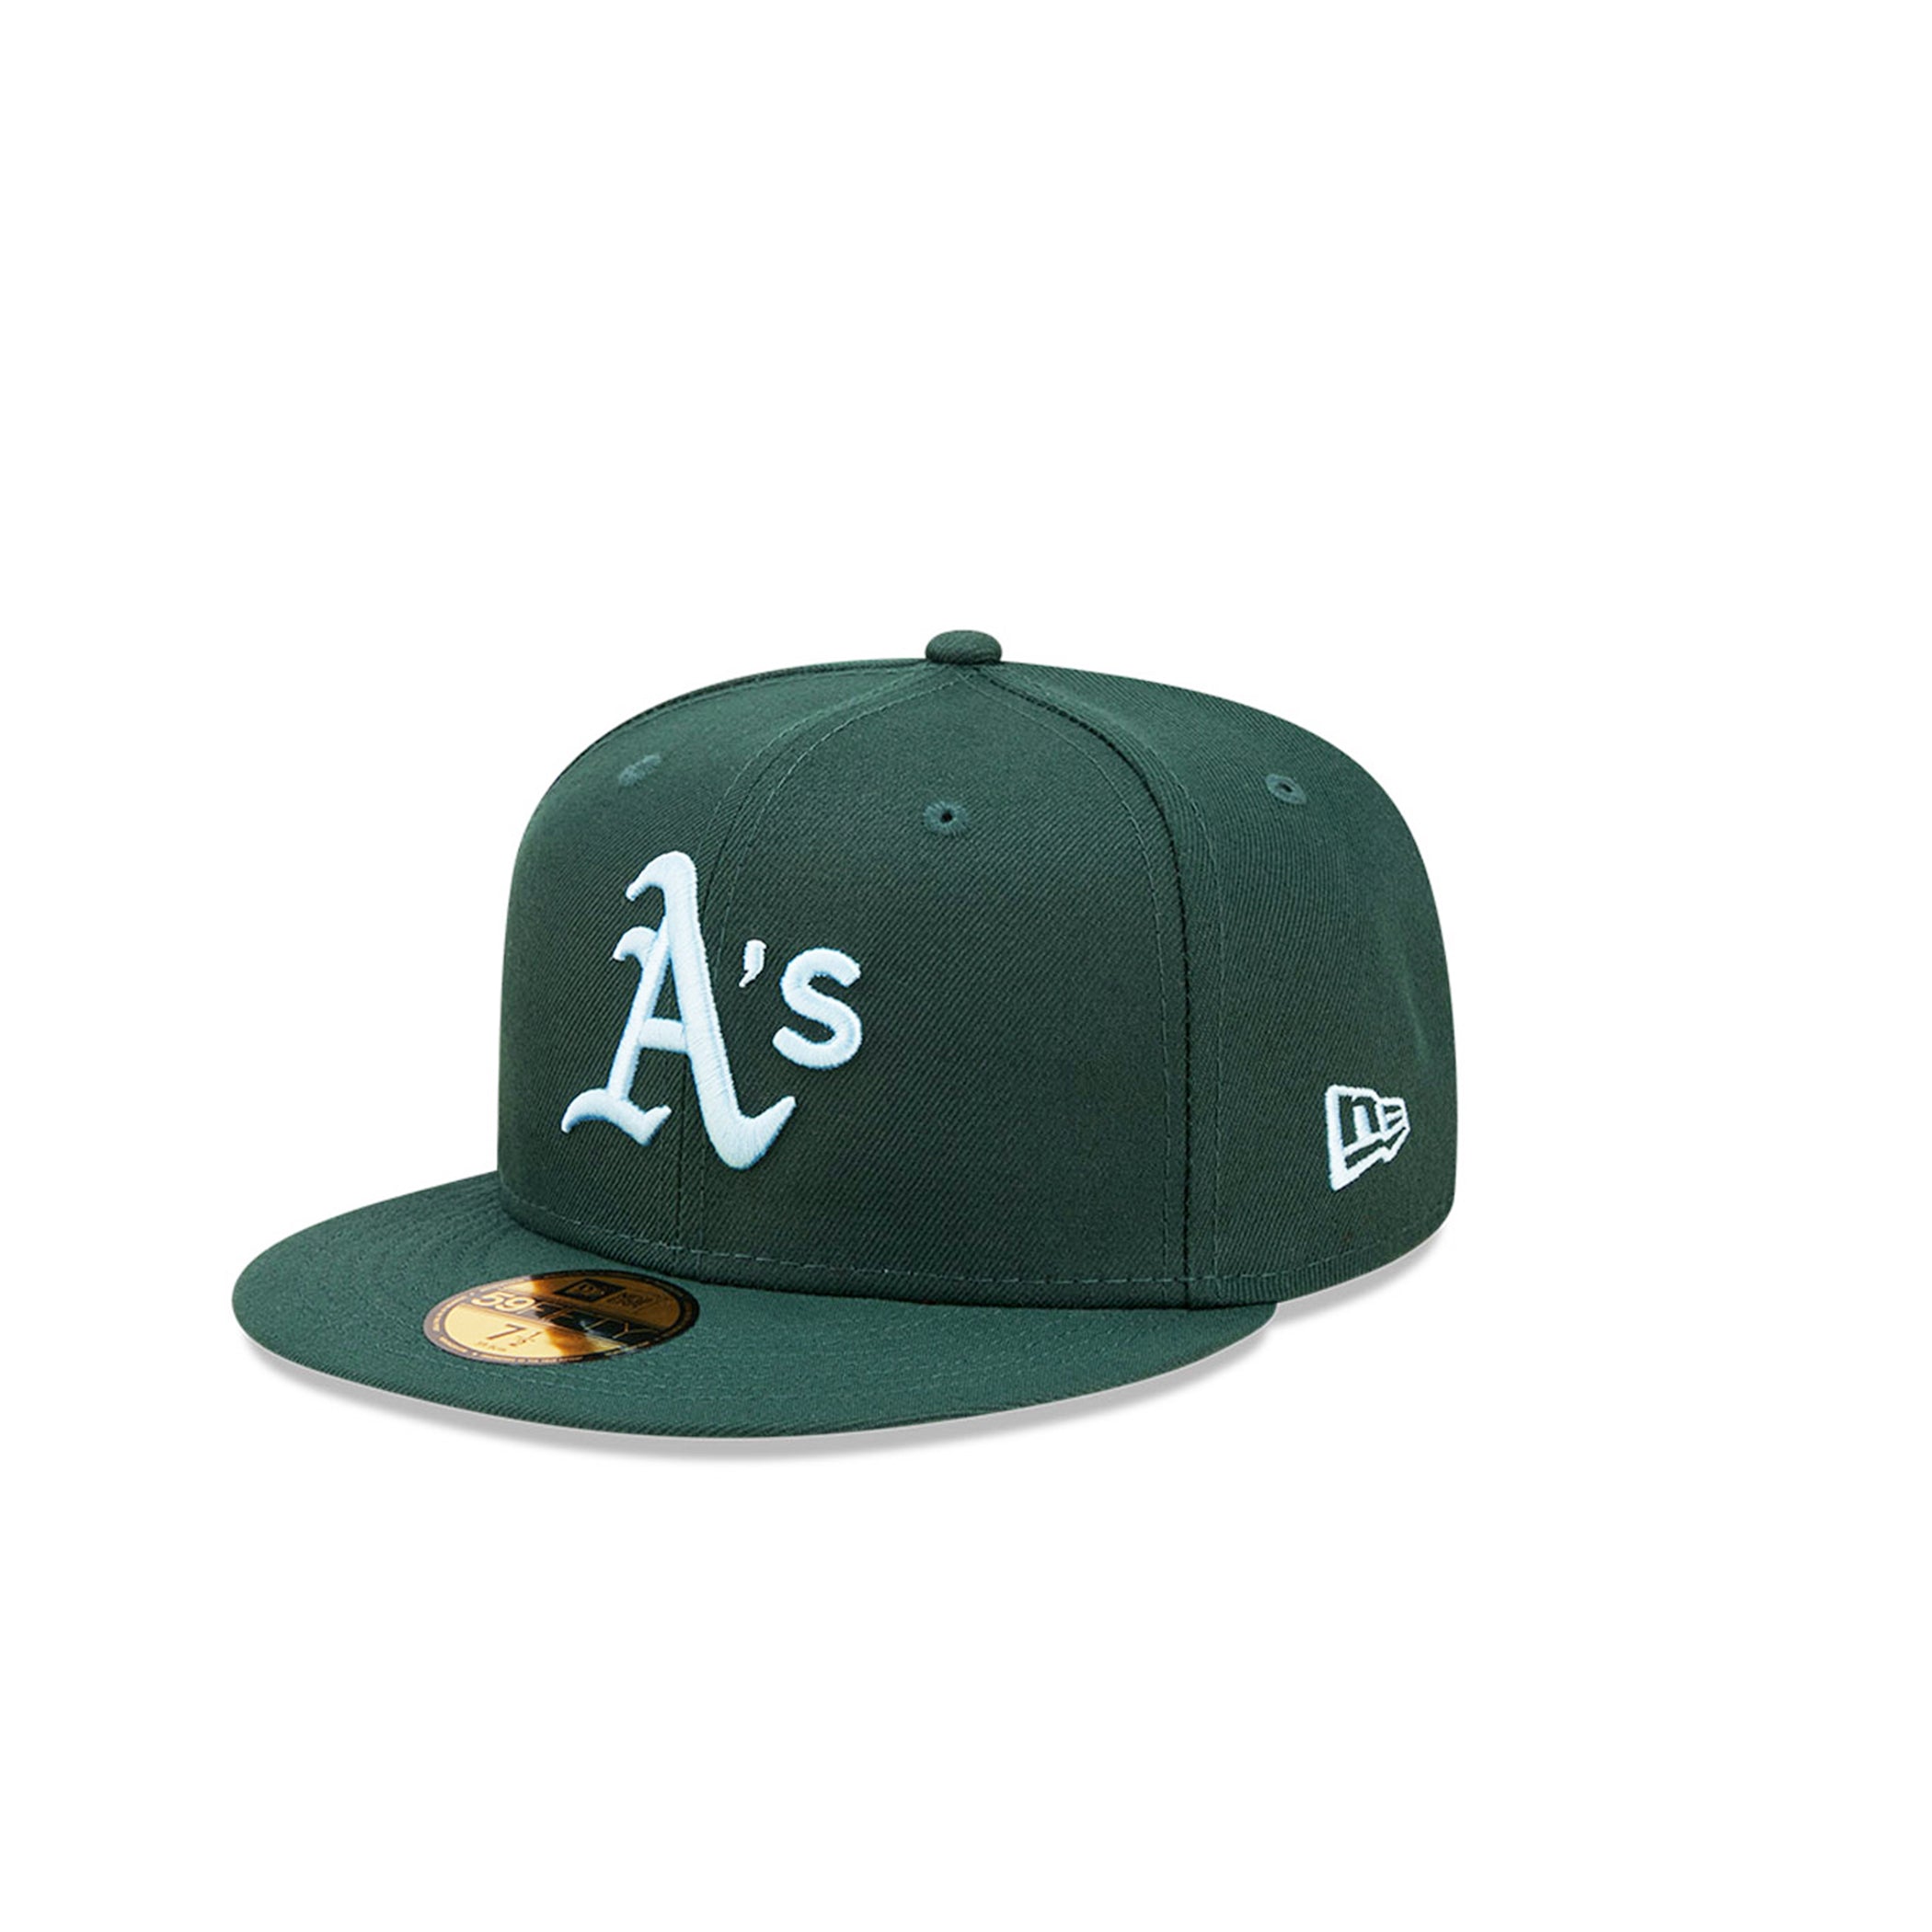 MLB Athletics Team Green/Yellow Baseball Cap